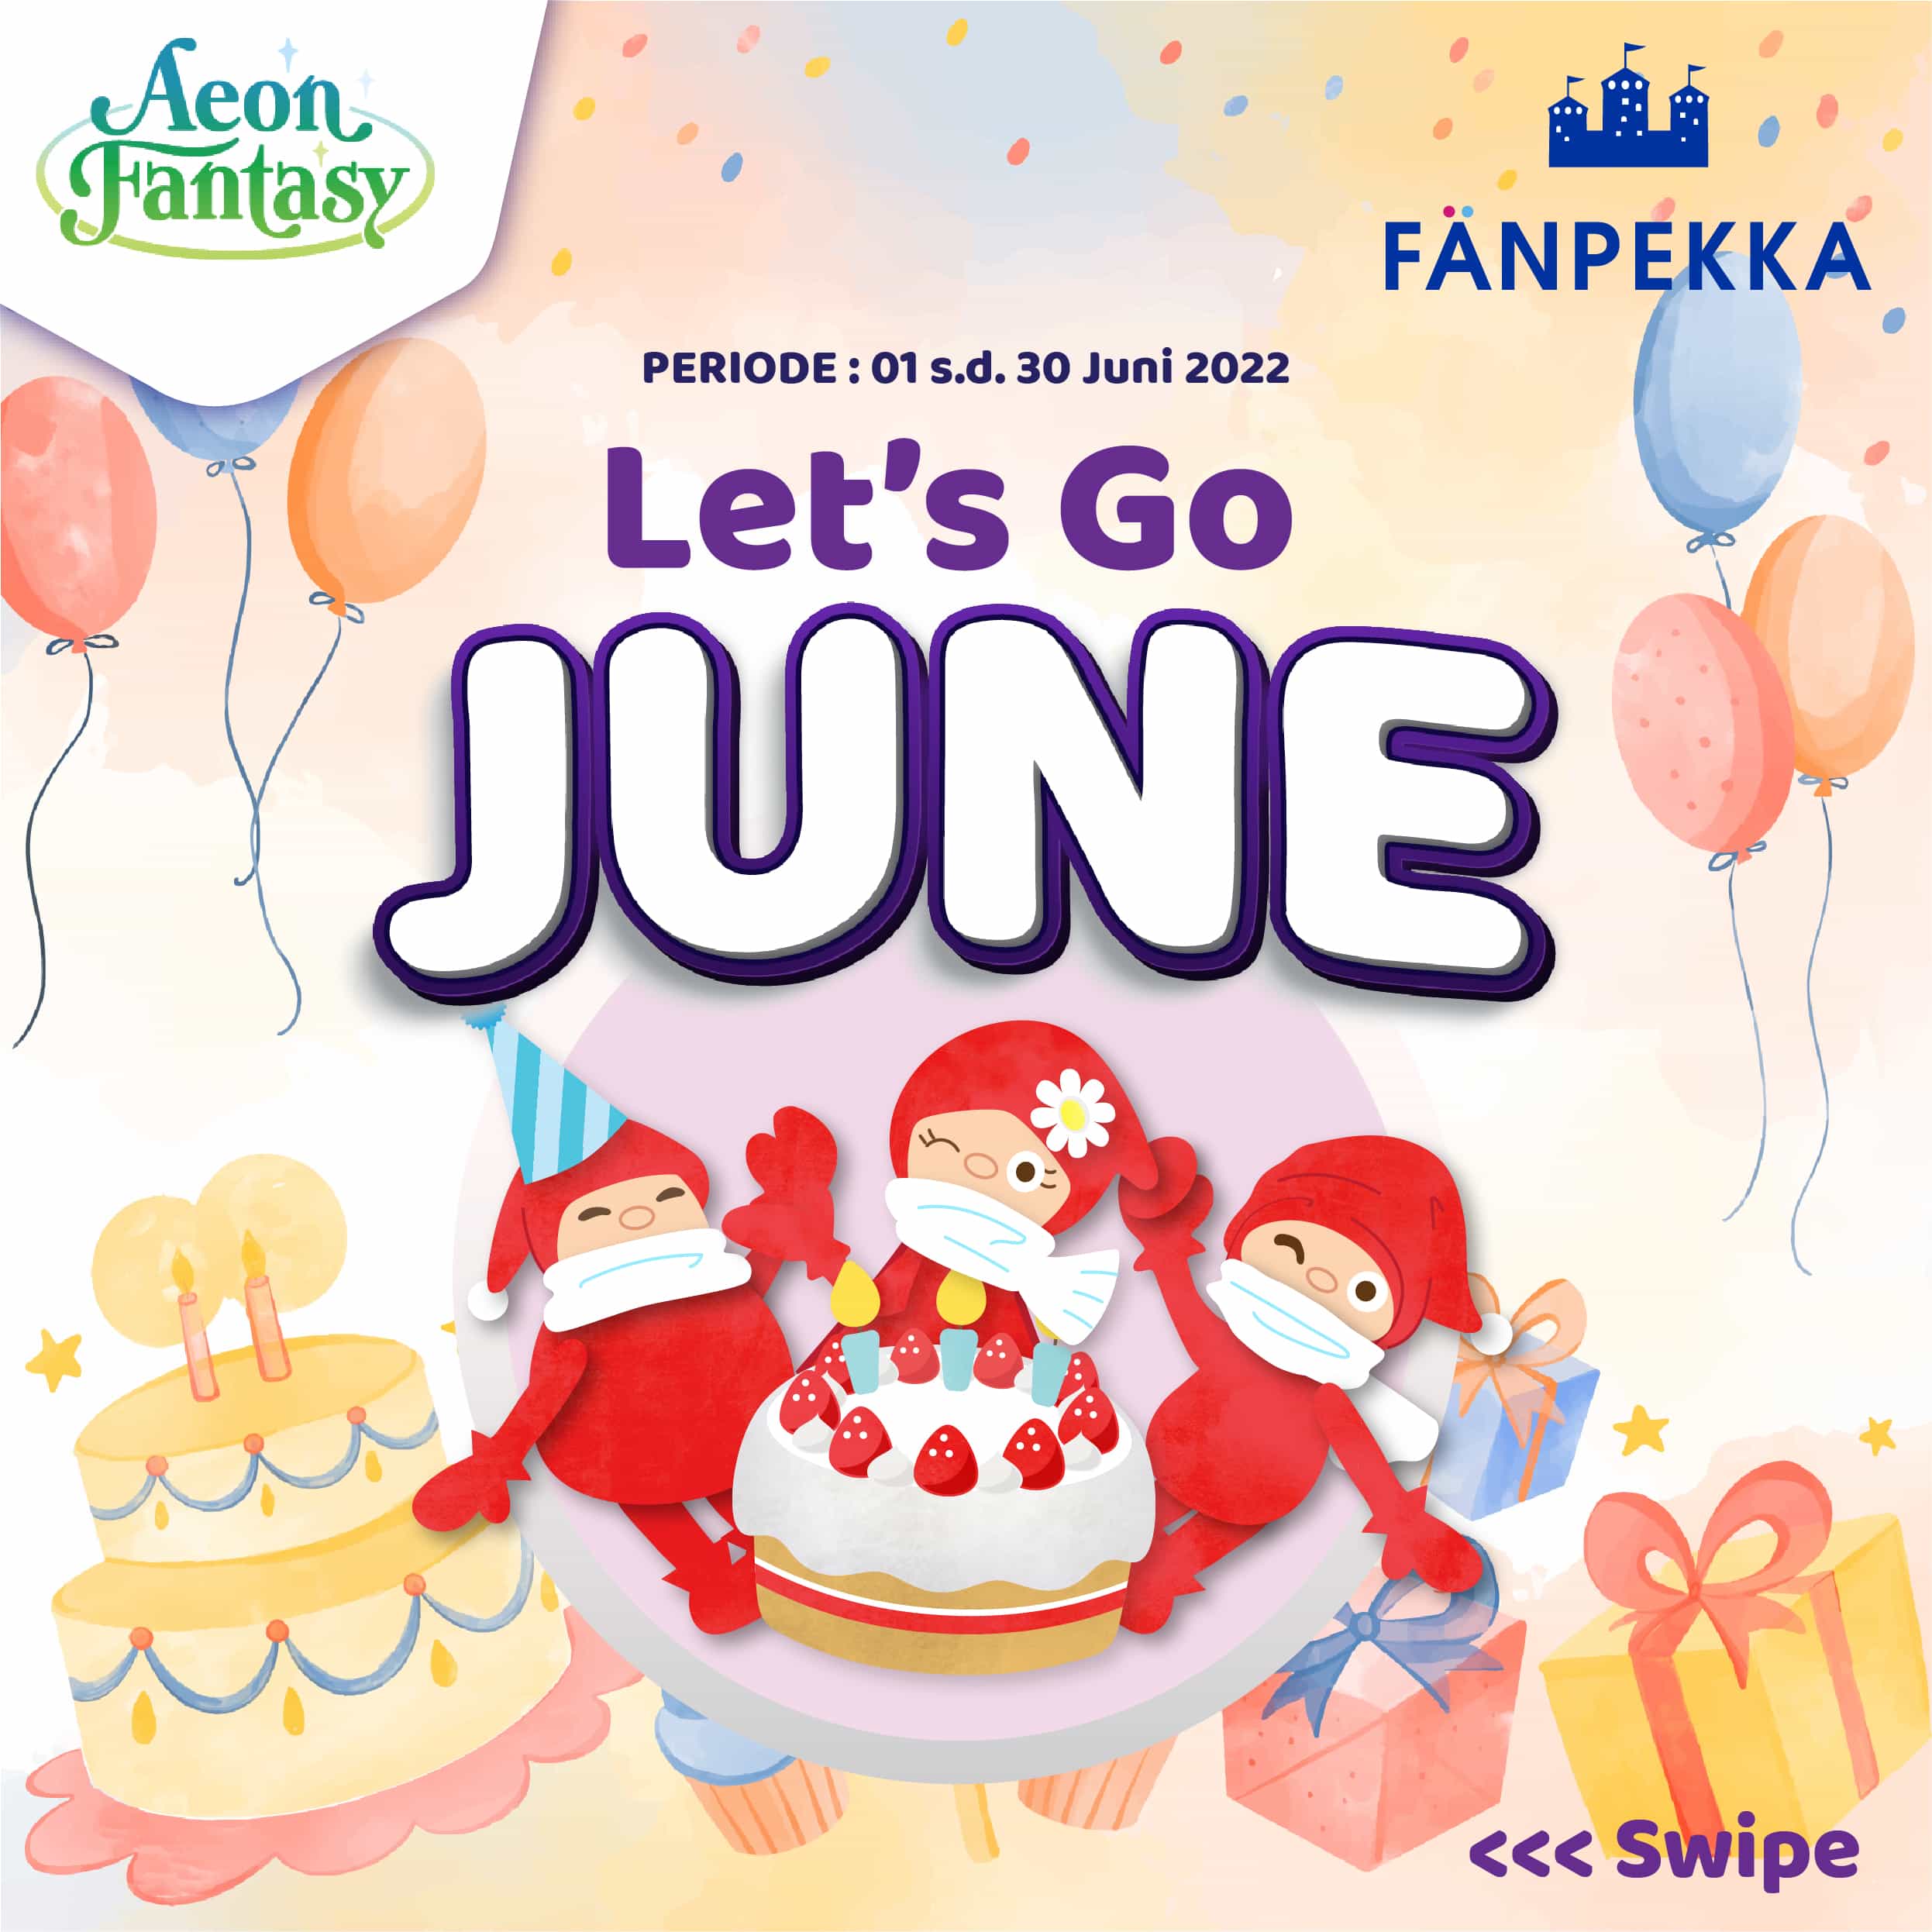 (Indonesia) Promo Birthday Fanpekka Let’s Go June